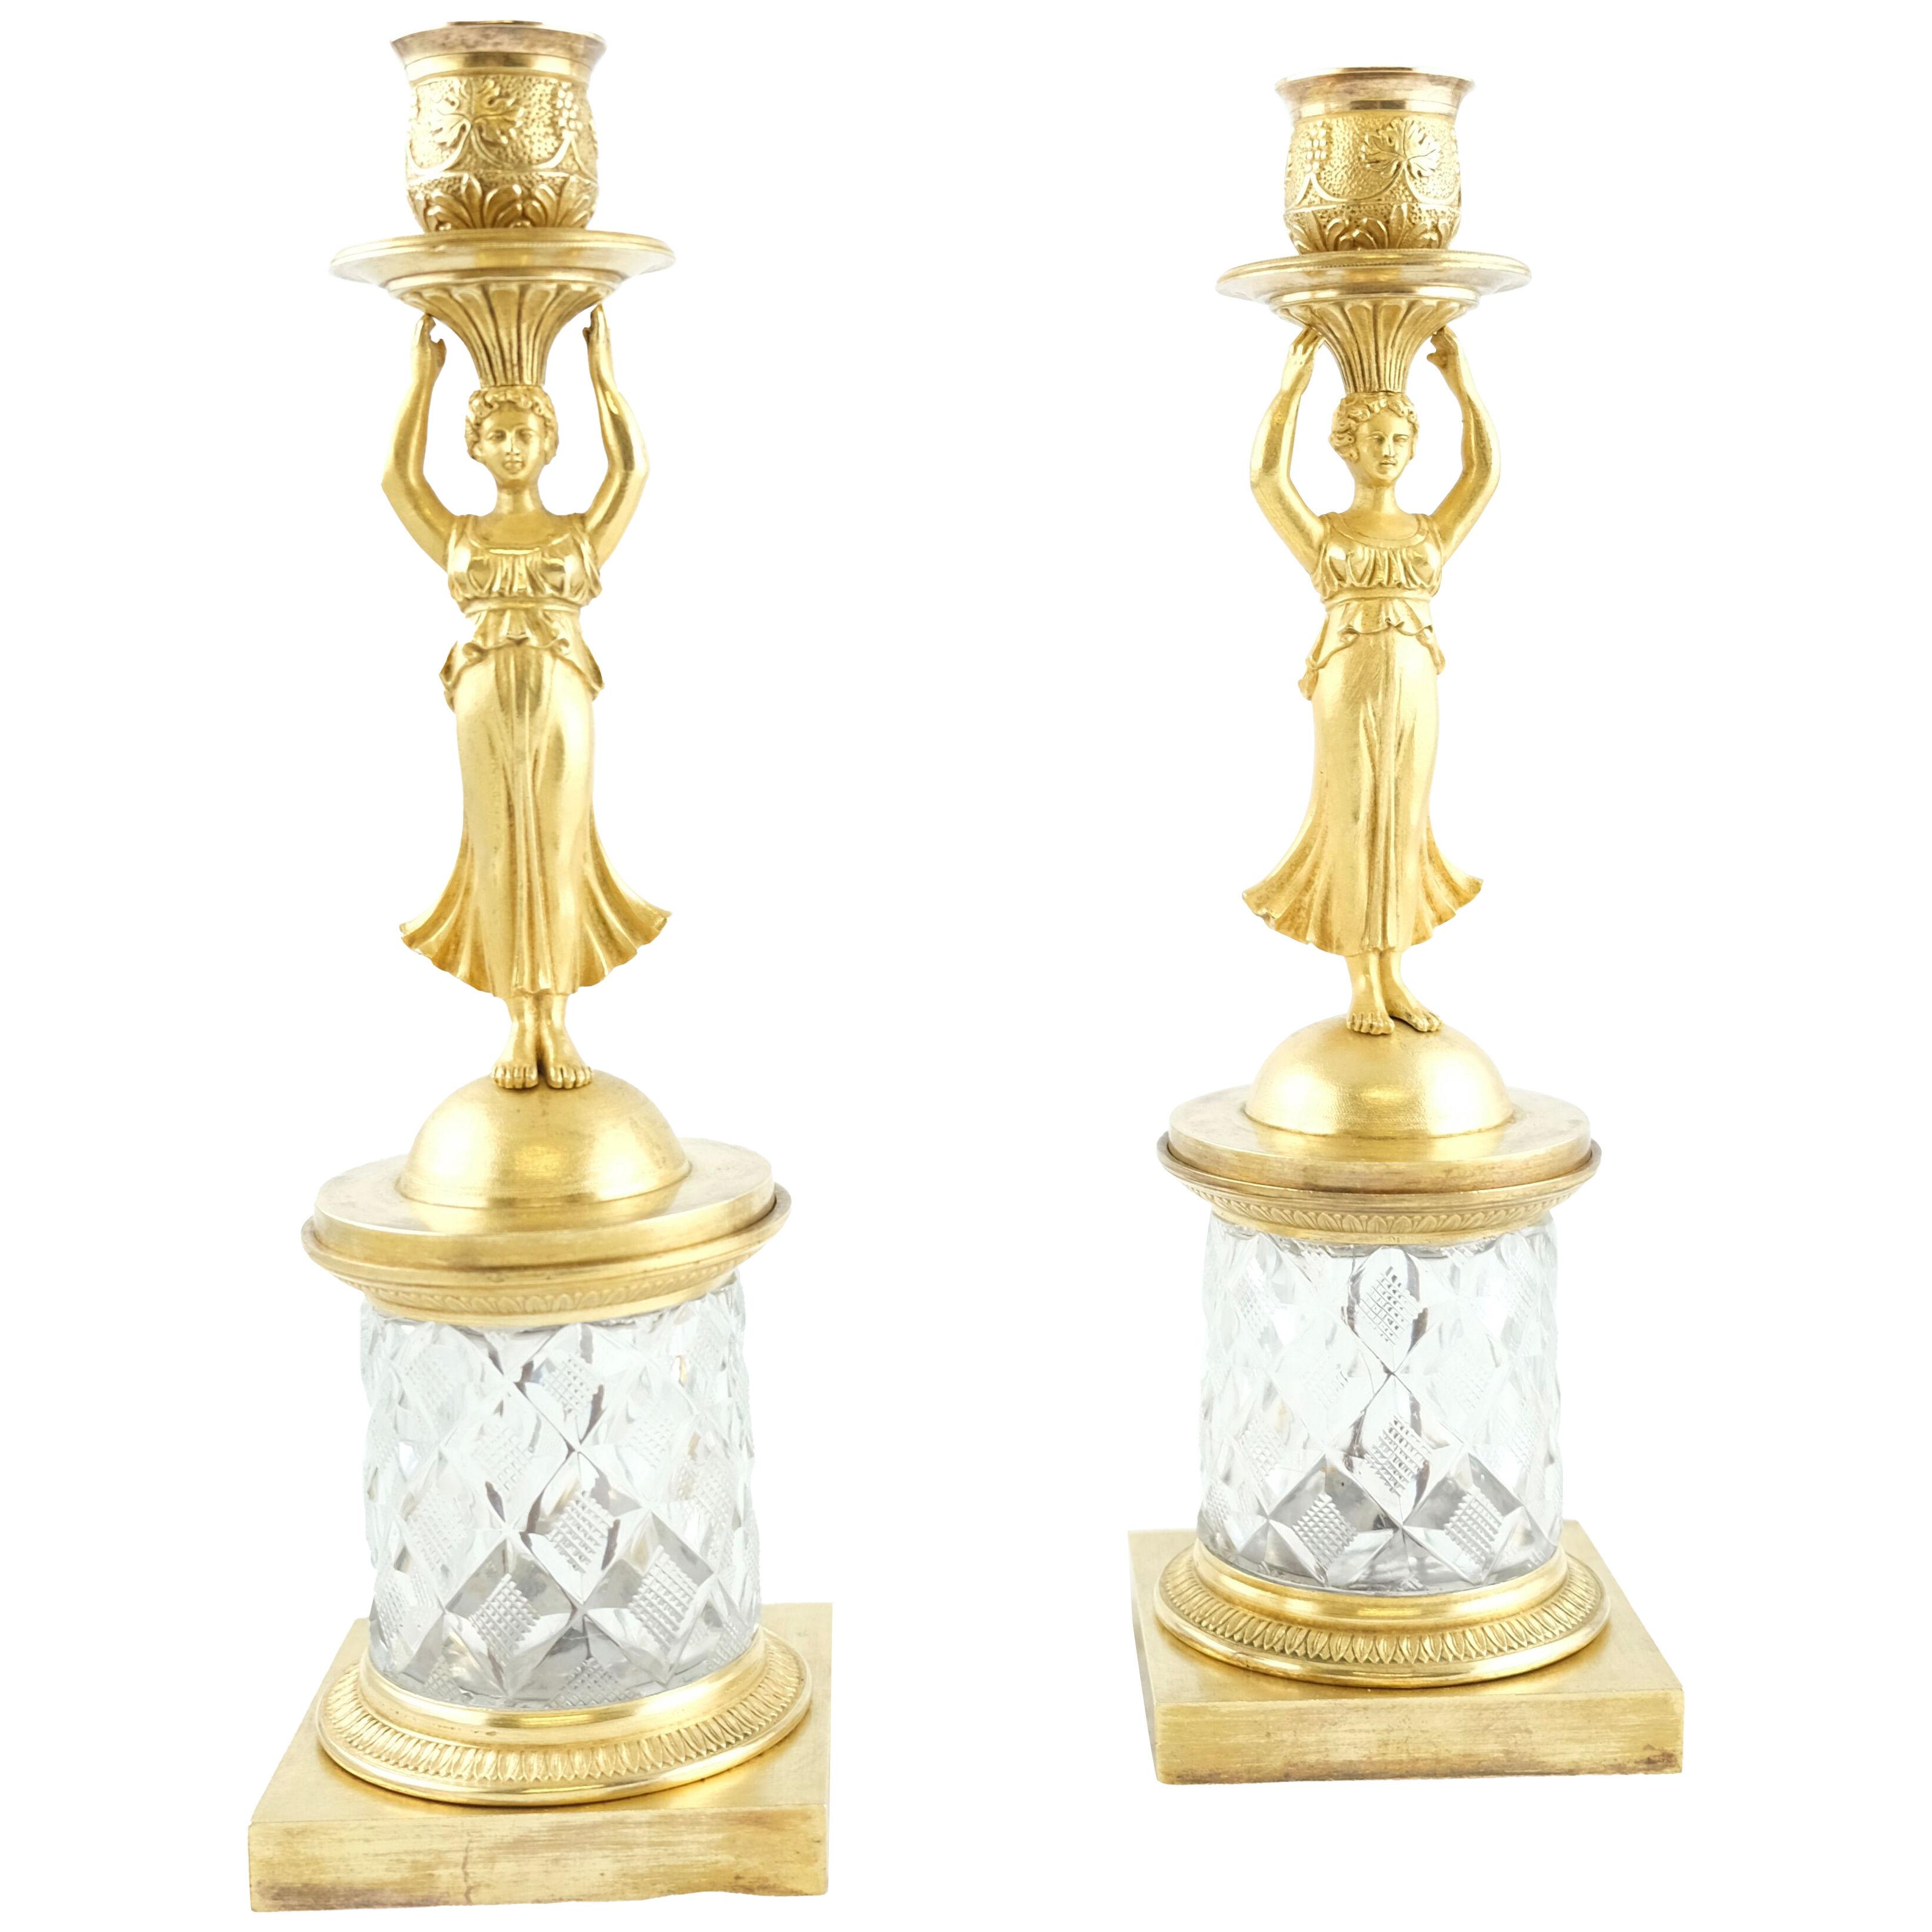 A pair of candlesticks made ca 1800